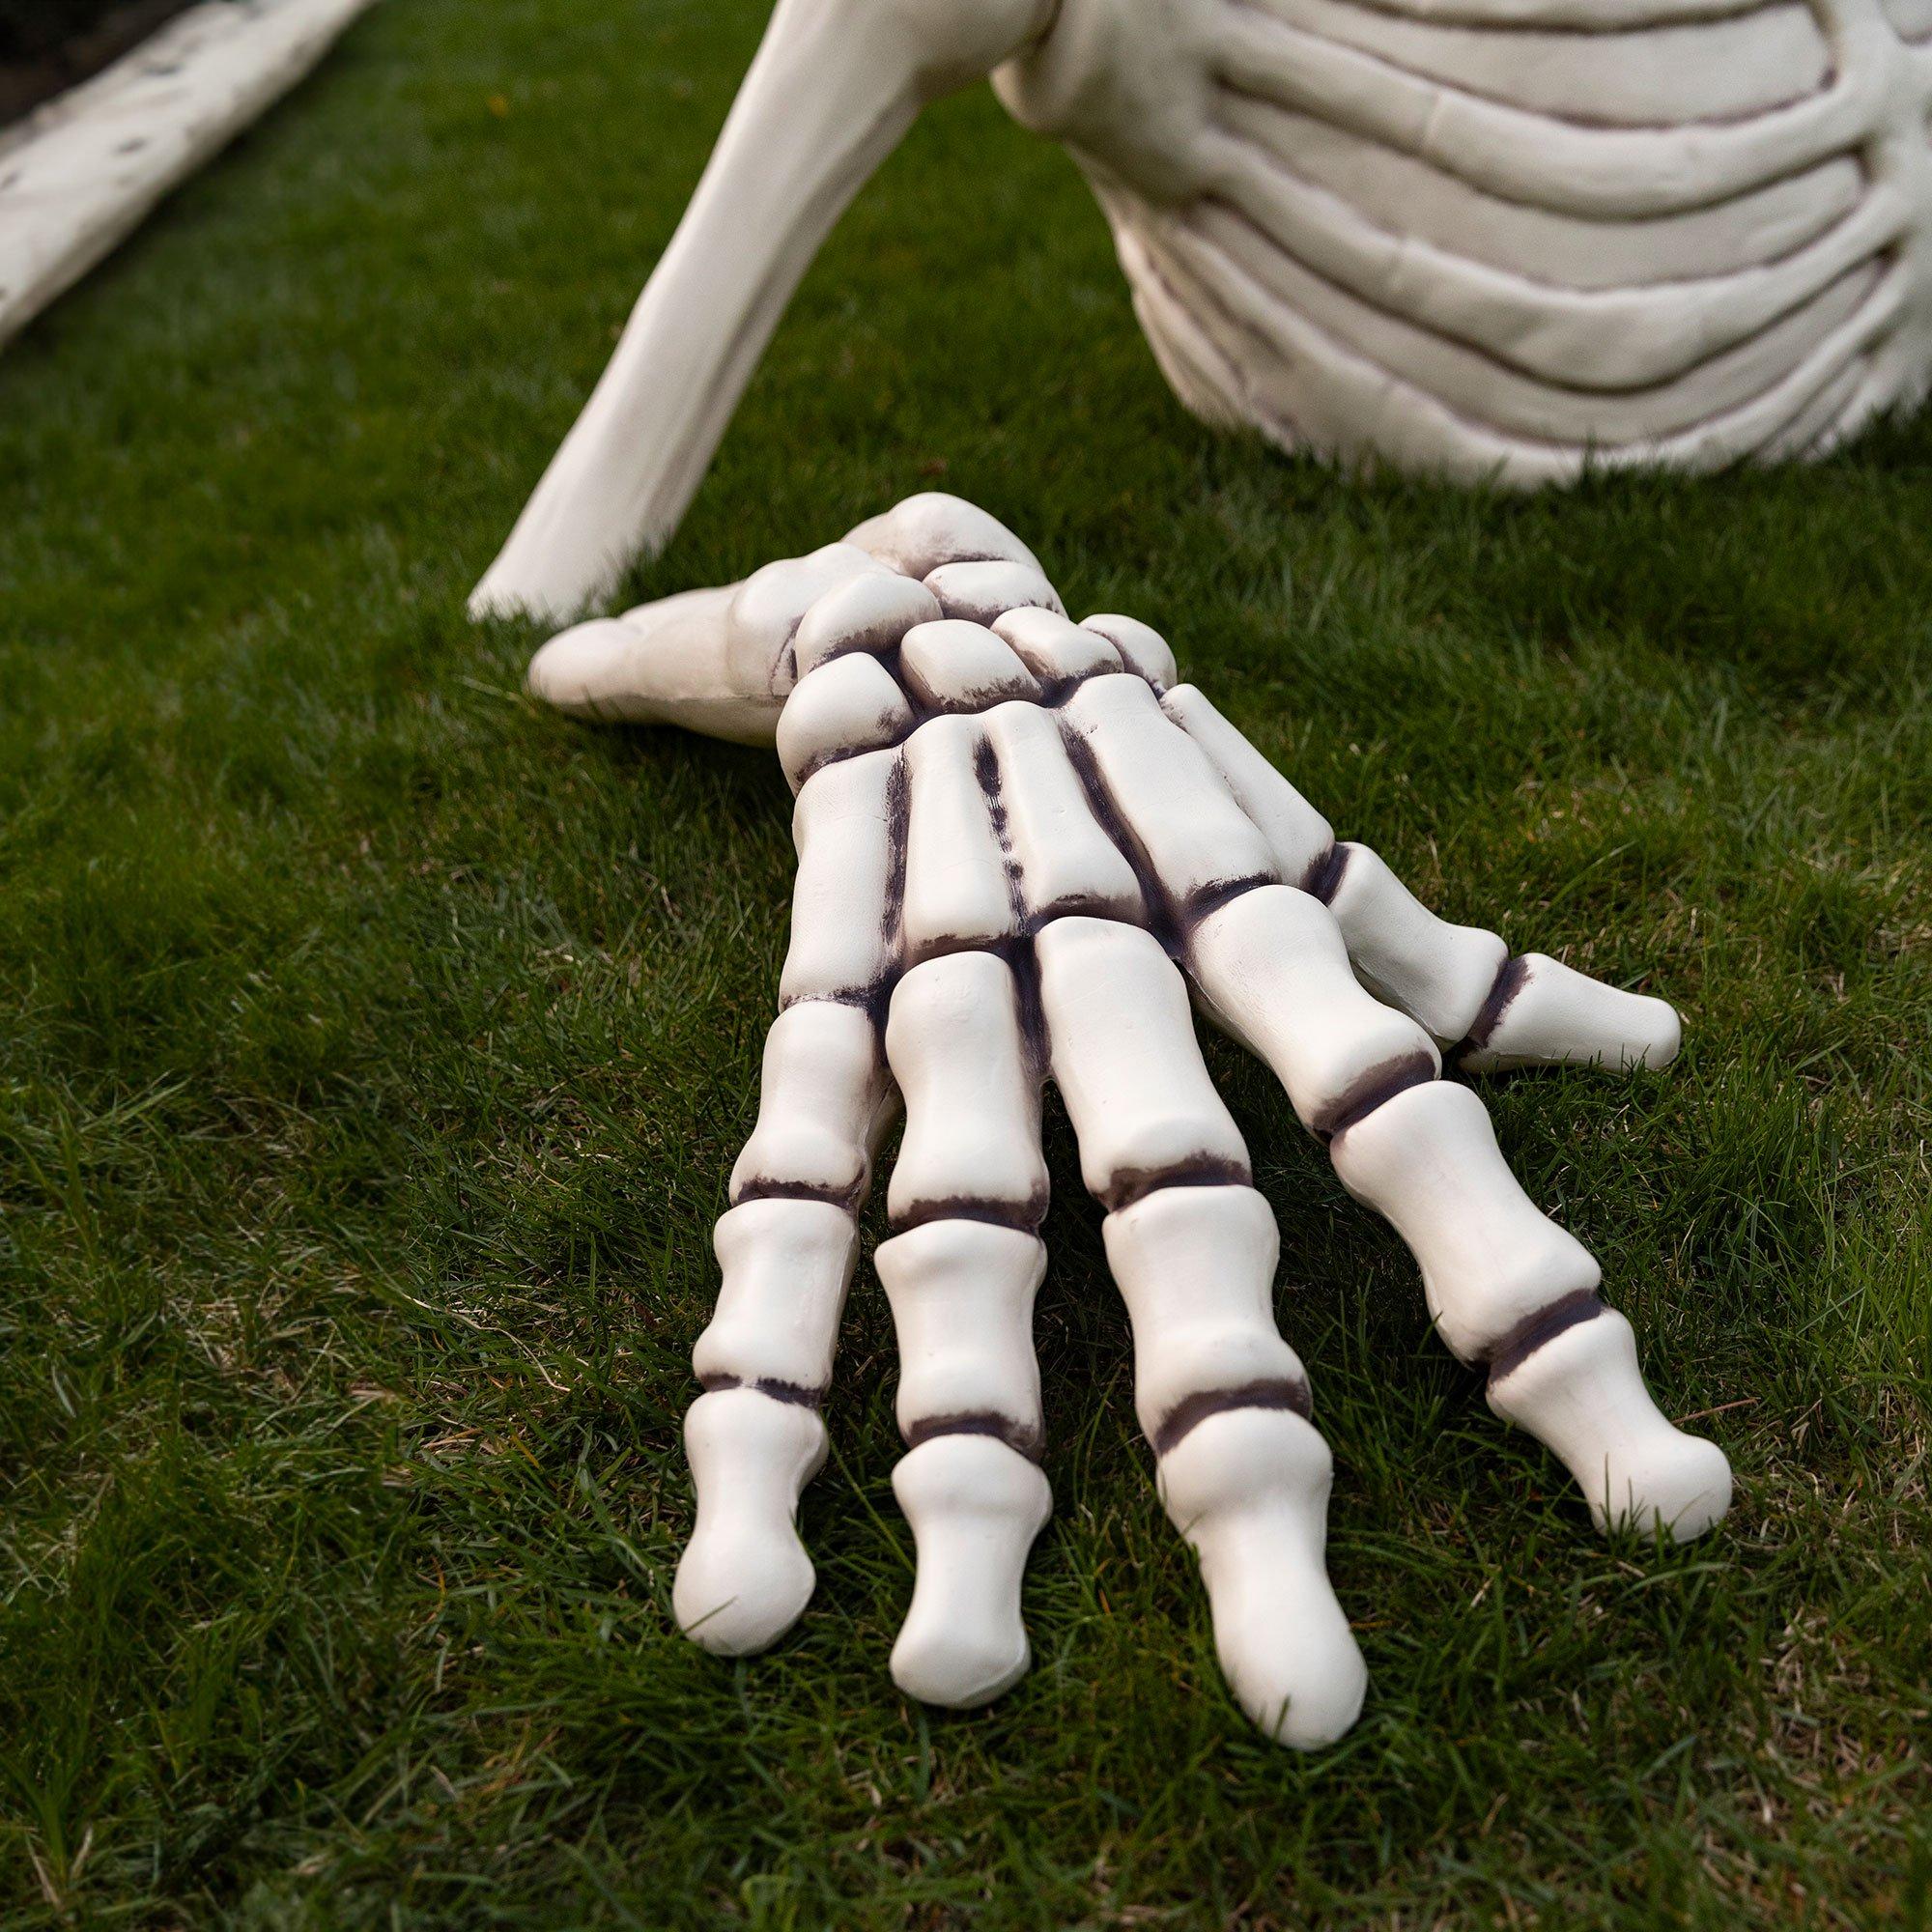 Giant Rattles the Groundbreaking Skeleton Plastic Yard Decorating Kit, 8pc